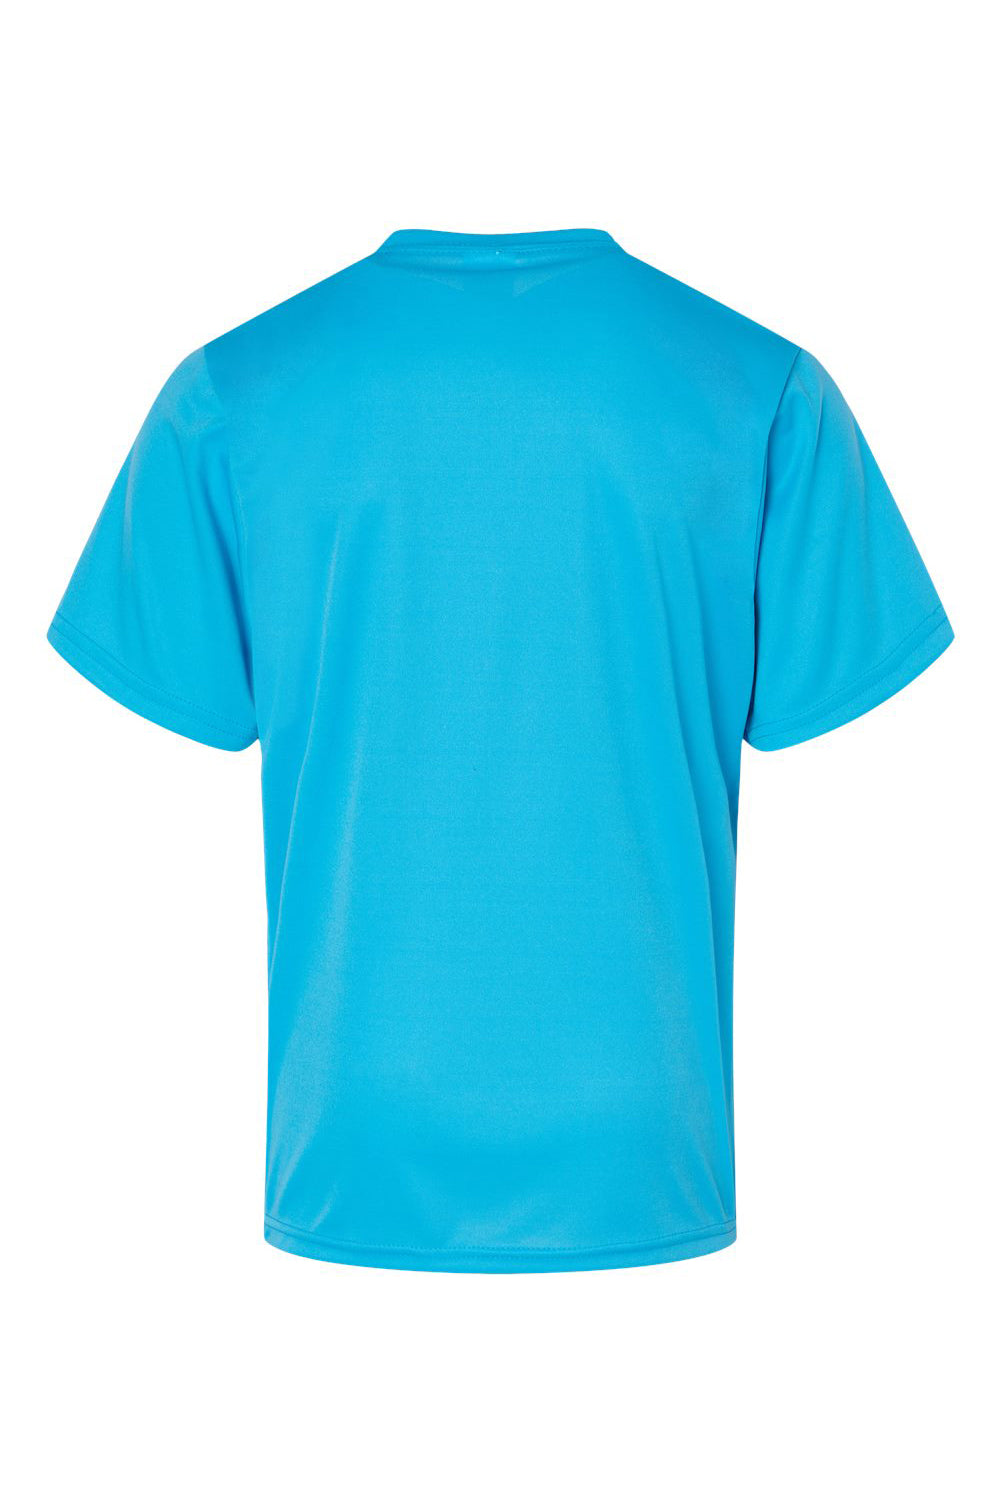 C2 Sport 5200 Youth Performance Moisture Wicking Short Sleeve Crewneck T-Shirt Electric Blue Flat Back